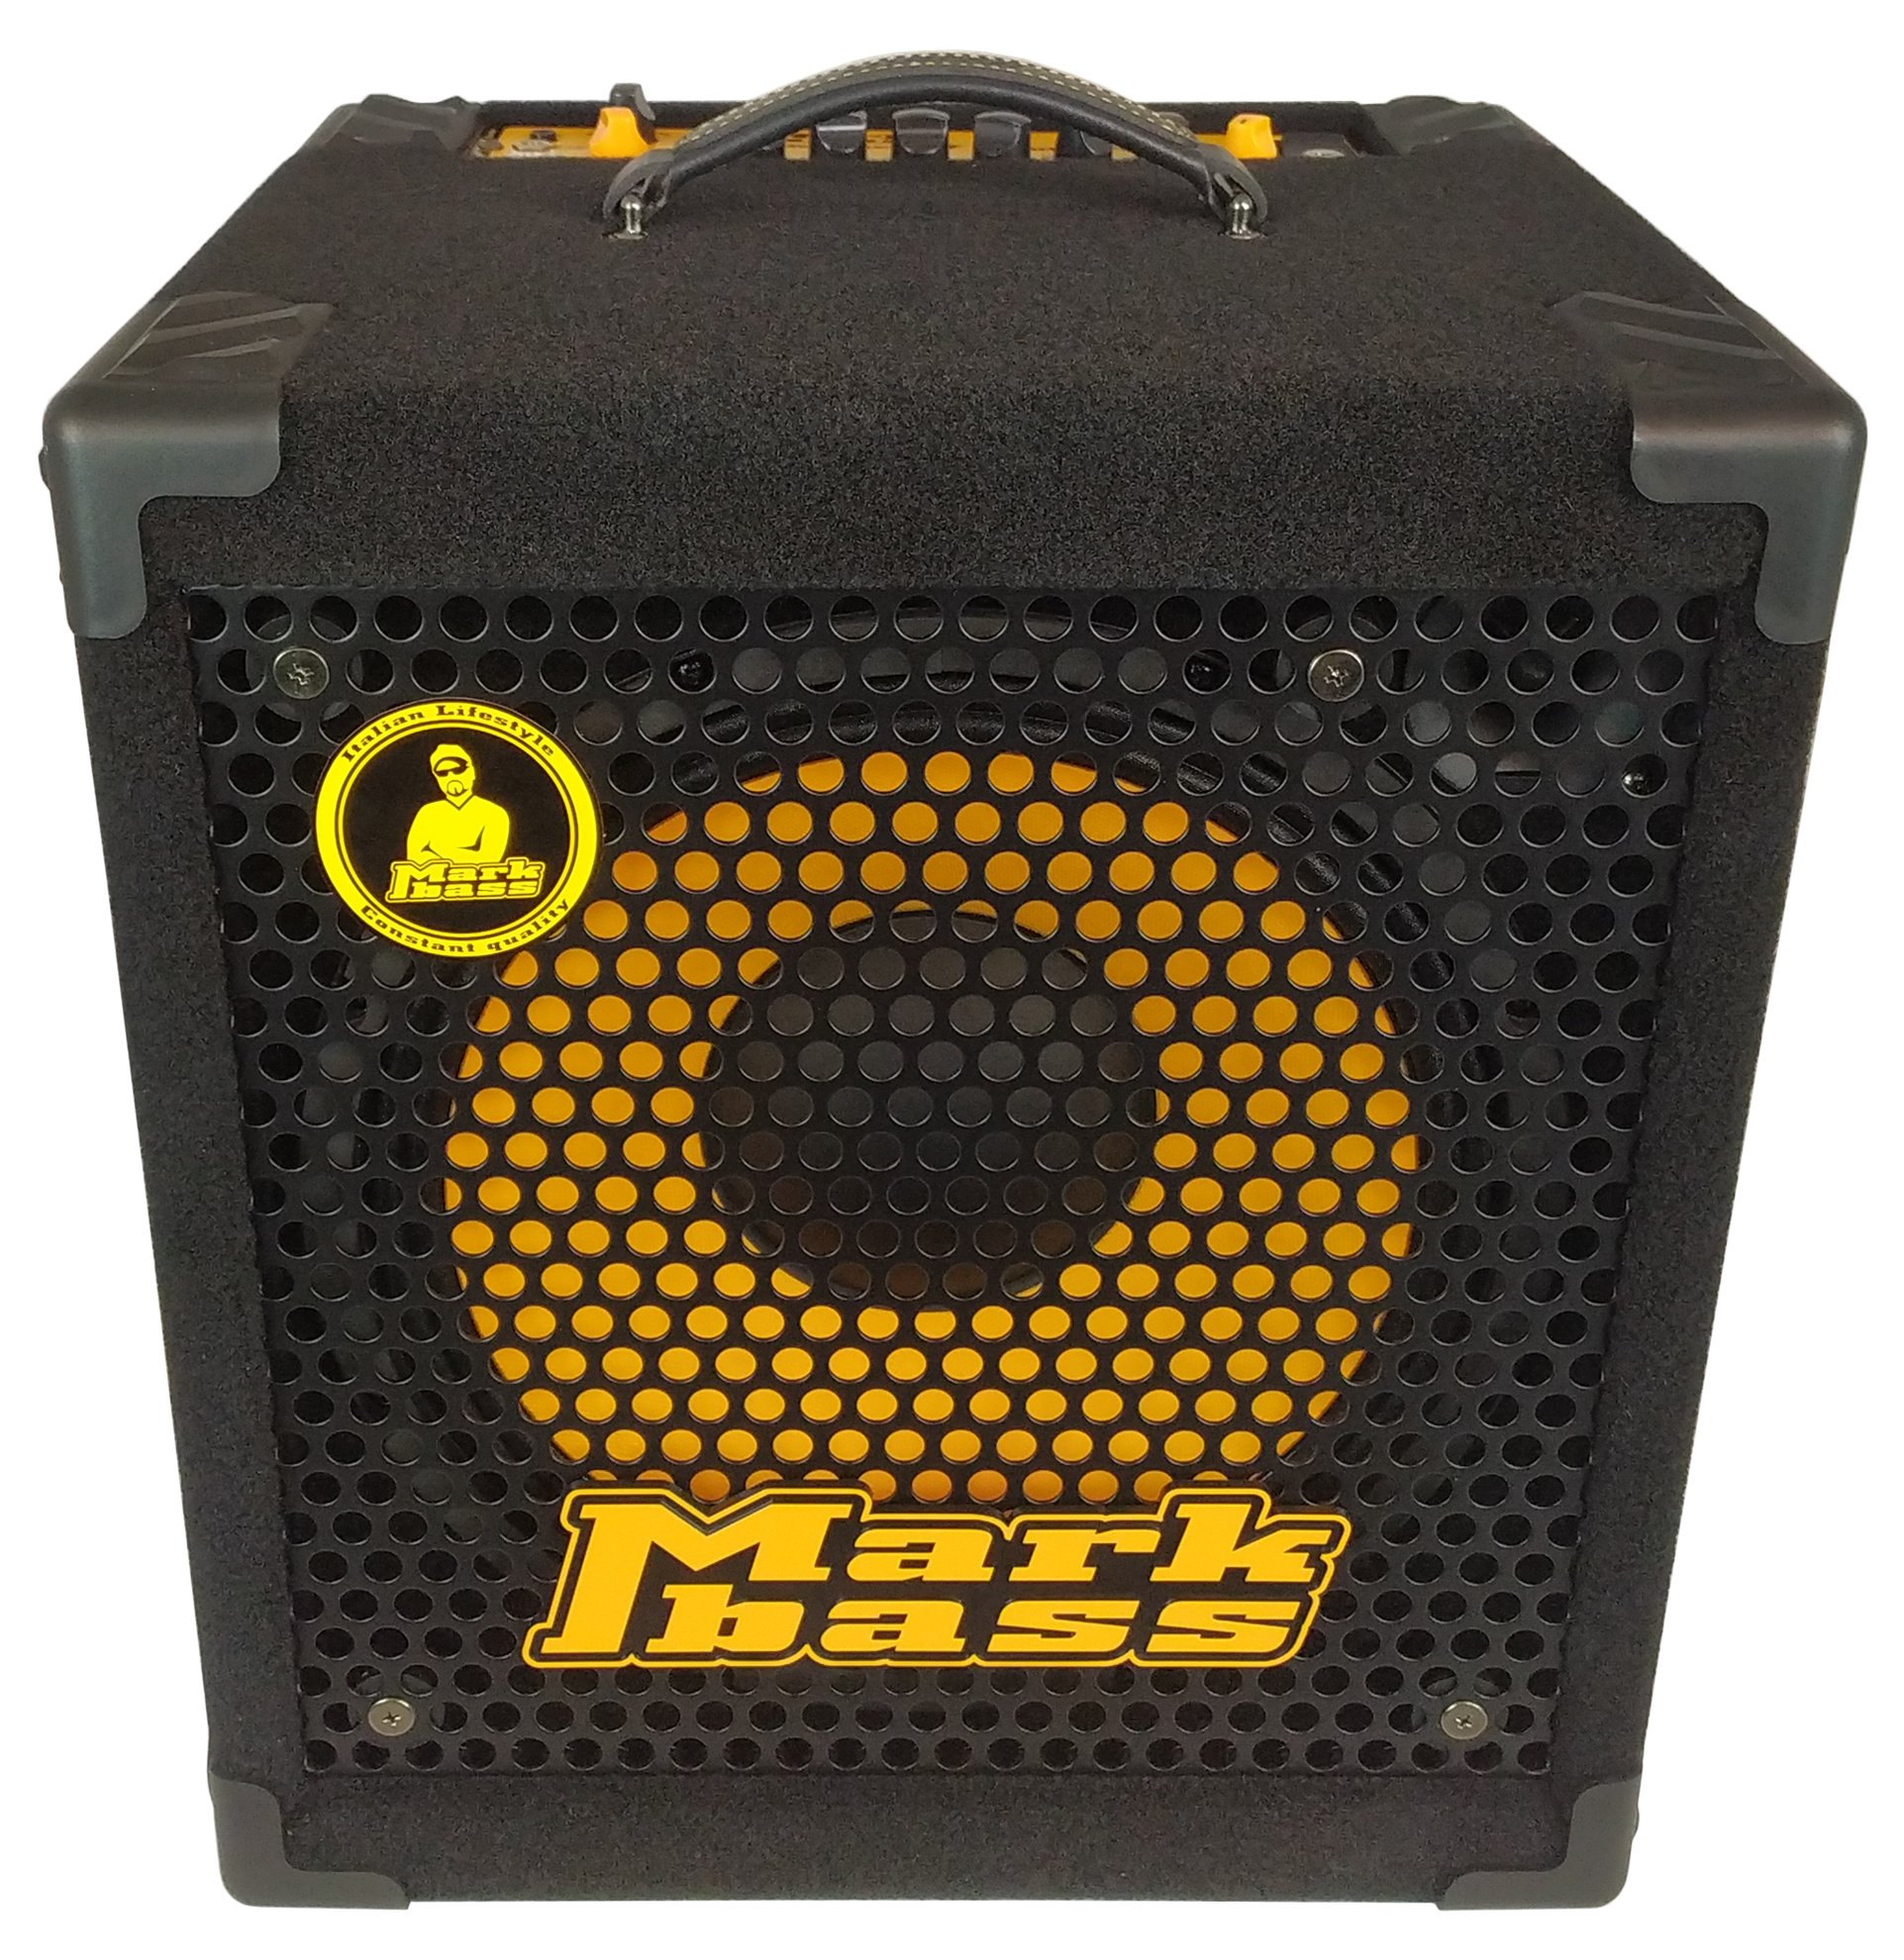 Markbass Mini Cmd 121 P Iv 1x12 300w Black - Bass combo amp - Variation 2